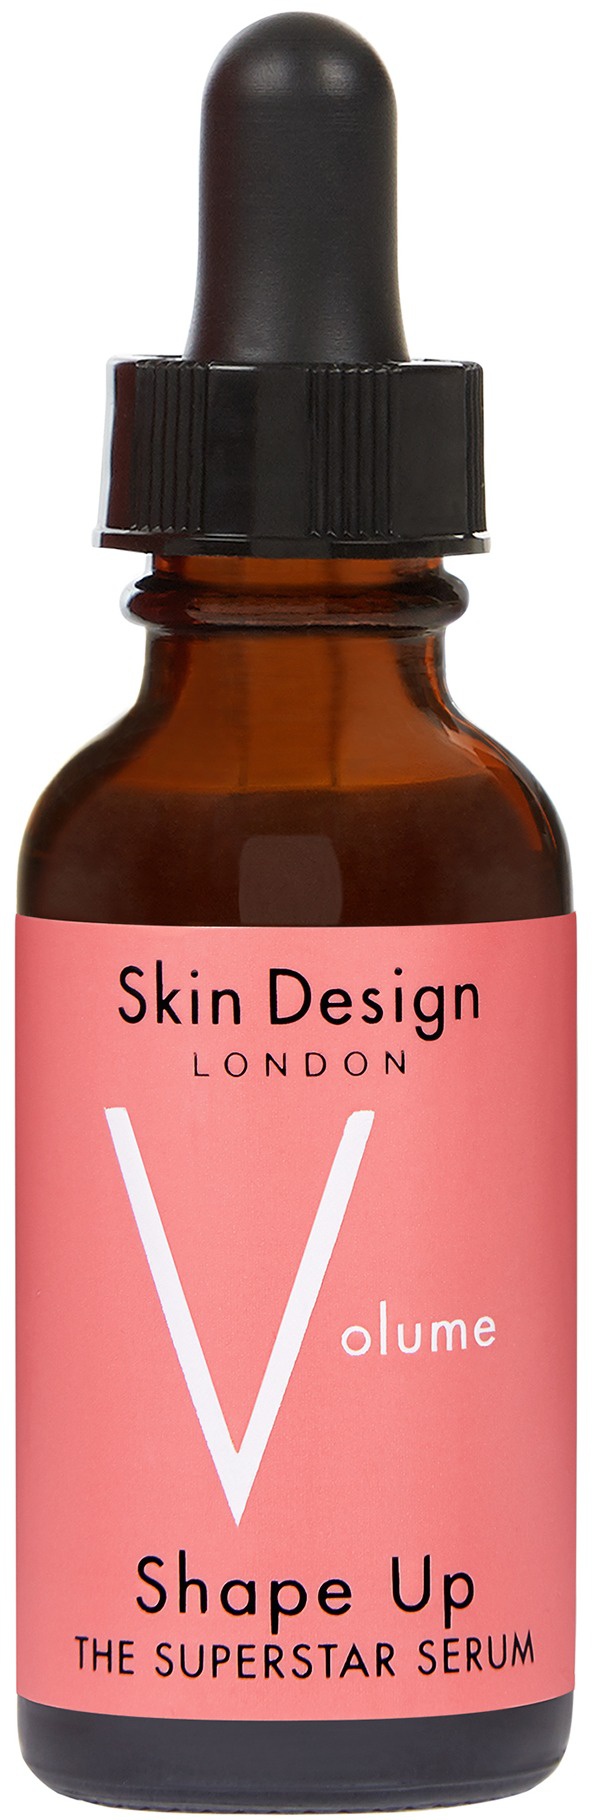 Skin Design London Volume Shape Up The Superstar Serum